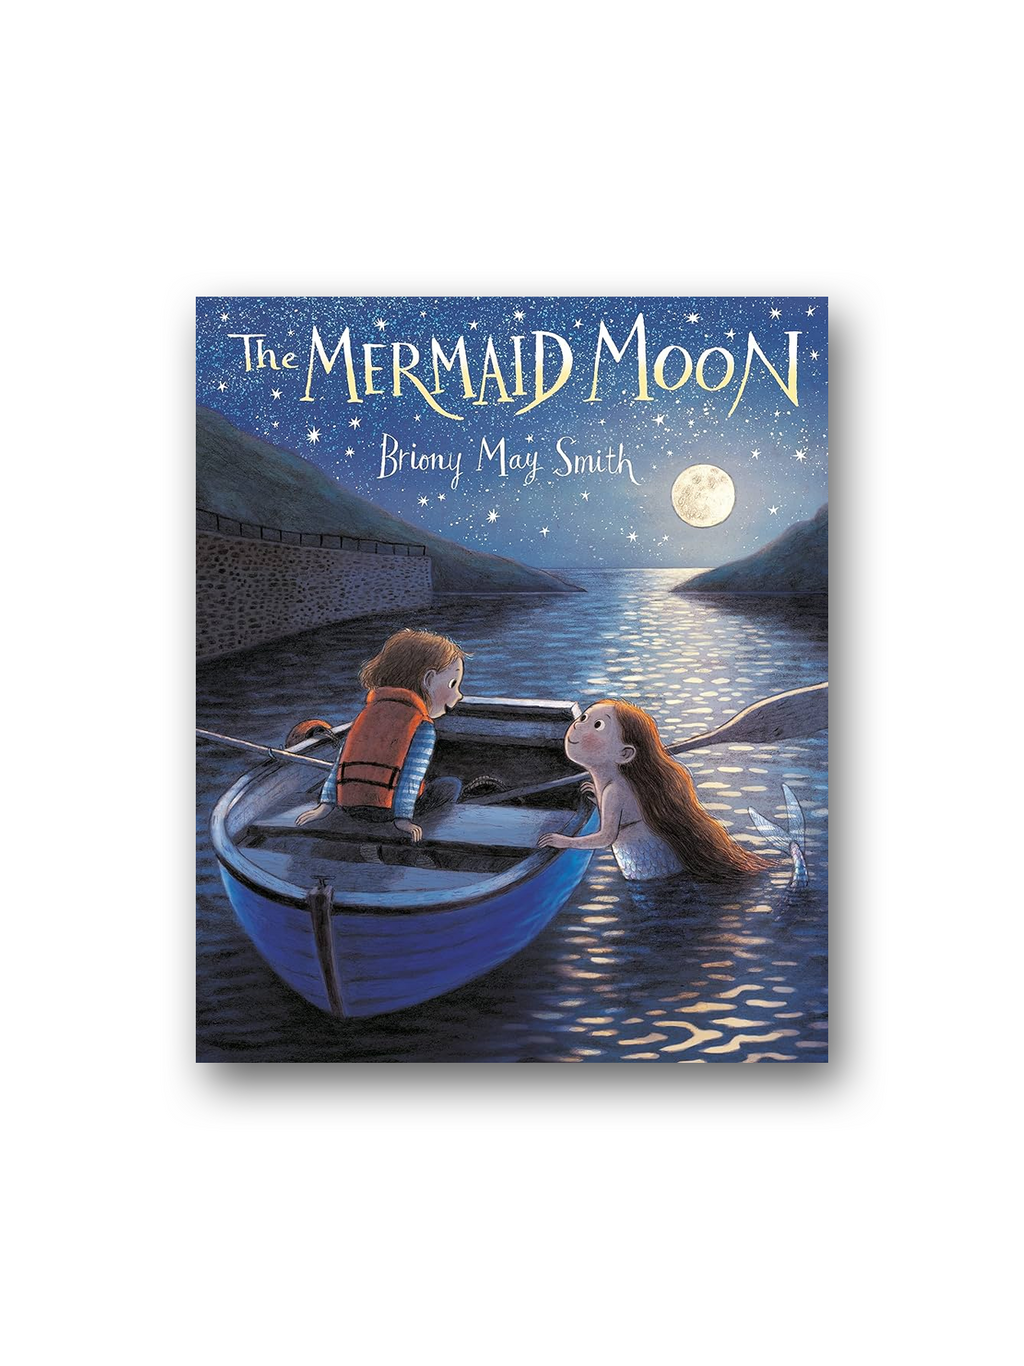 The Mermaid Moon